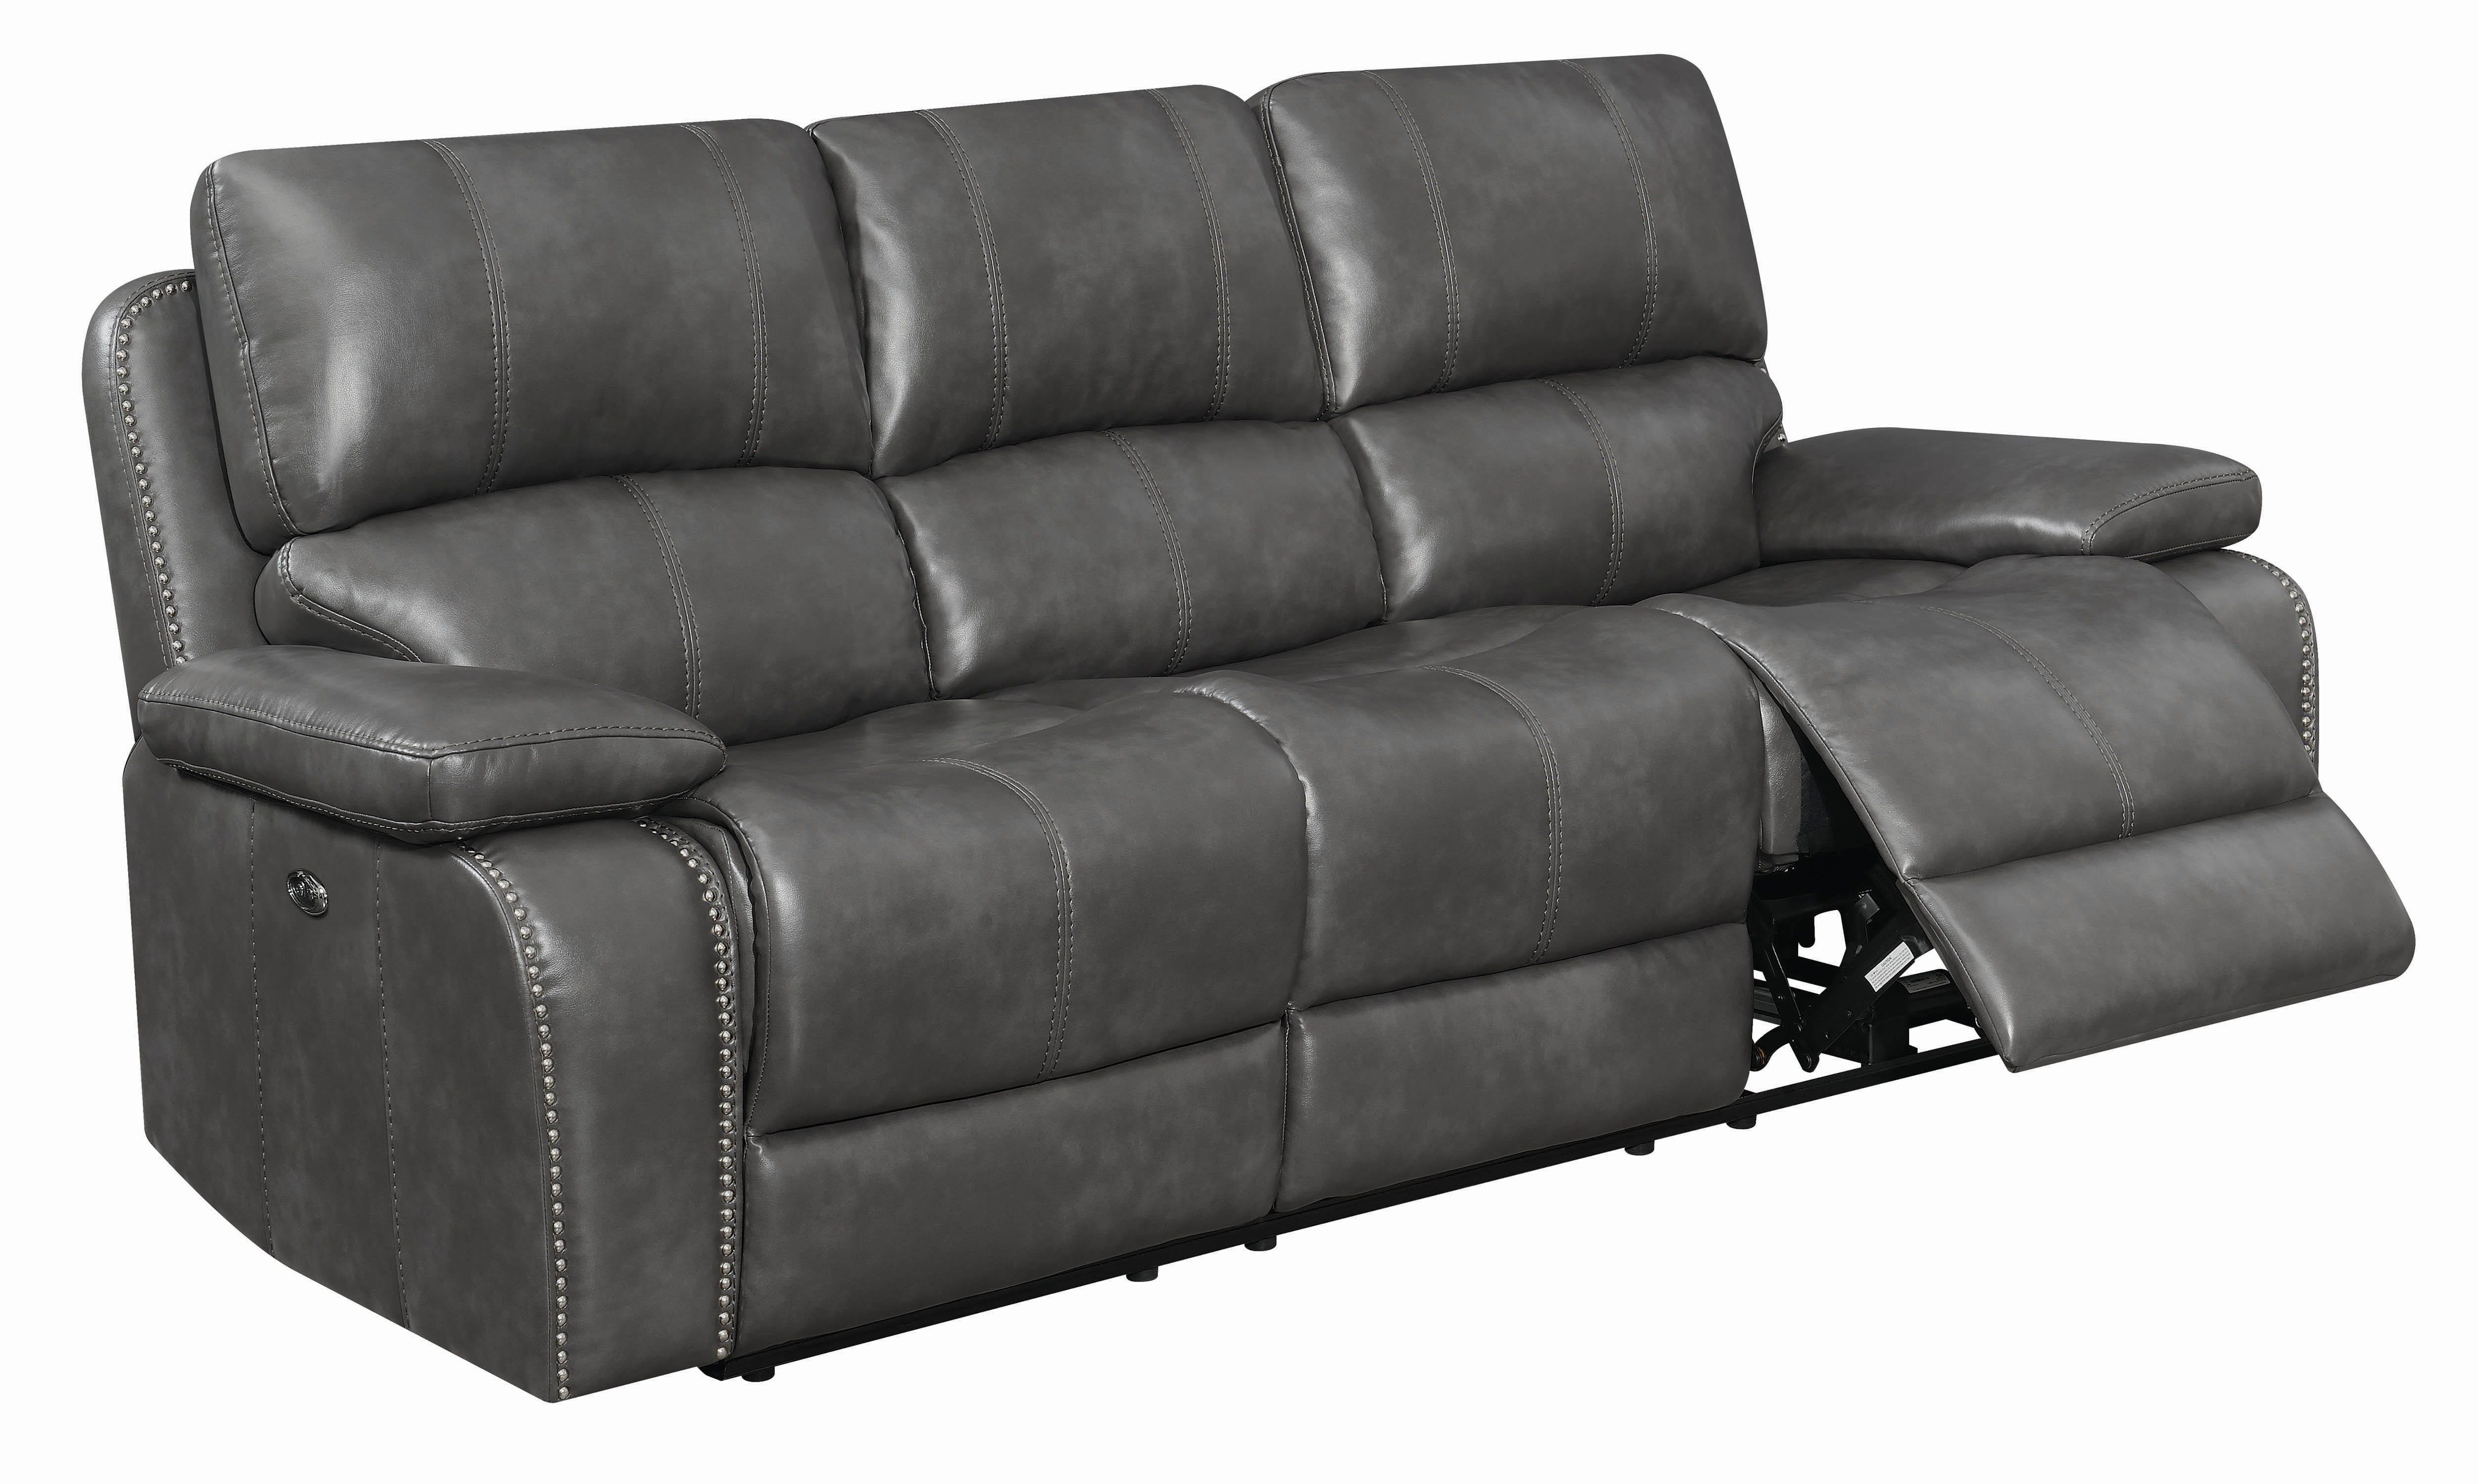 

    
603211P Modern Gray Leather Upholstery Power sofa Ravenna by Coaster
